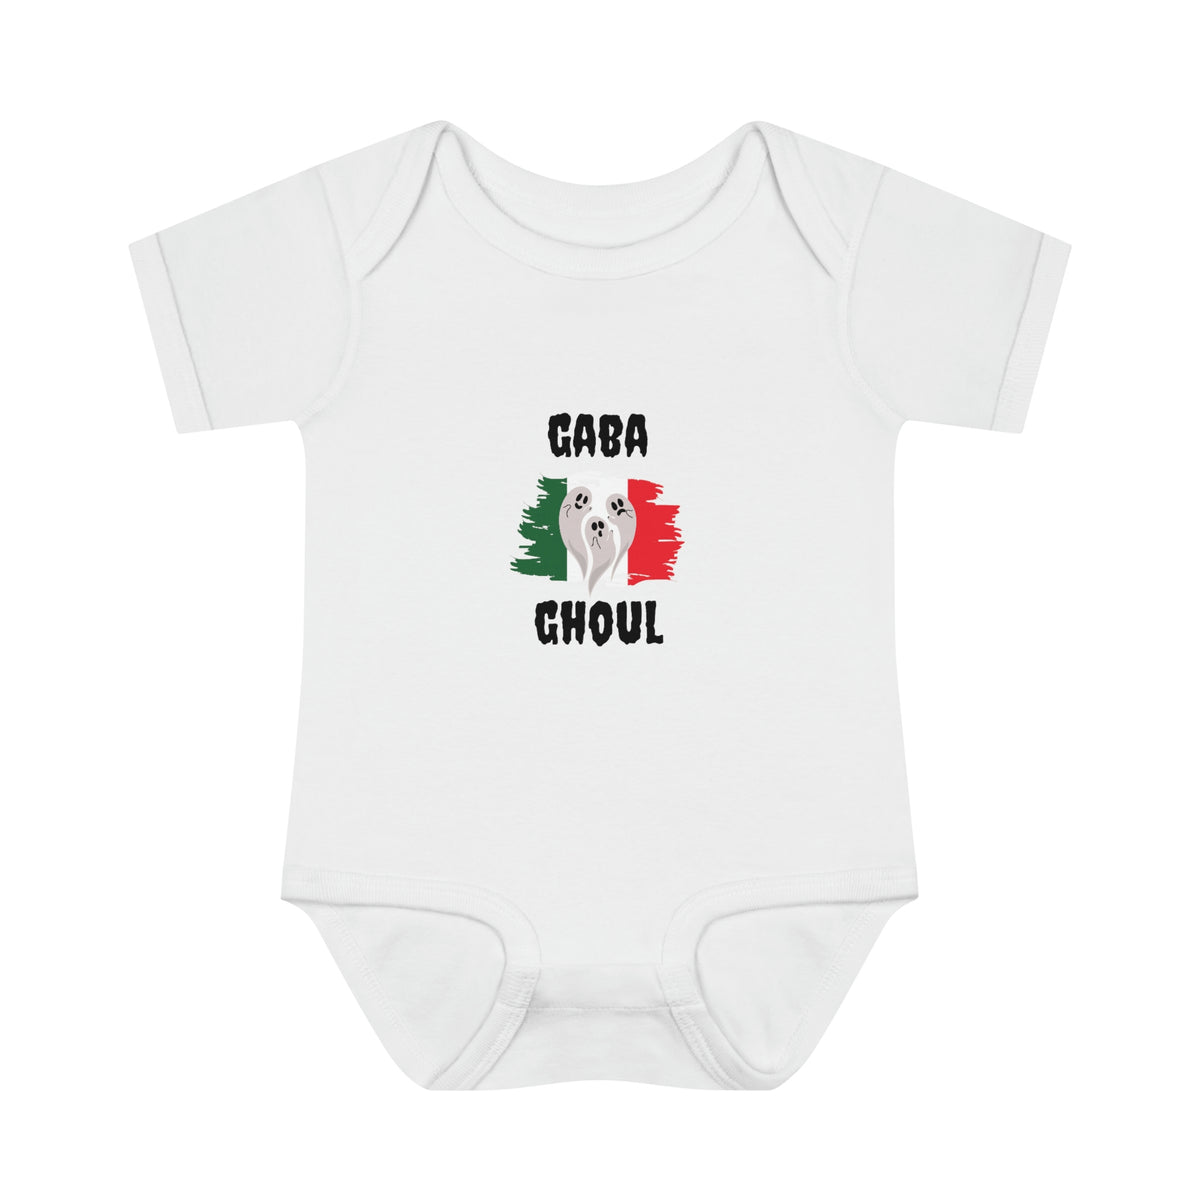 Gaba Ghoul Kids Onesie®, Italian Top for Babes, Halloween Humor for Babies